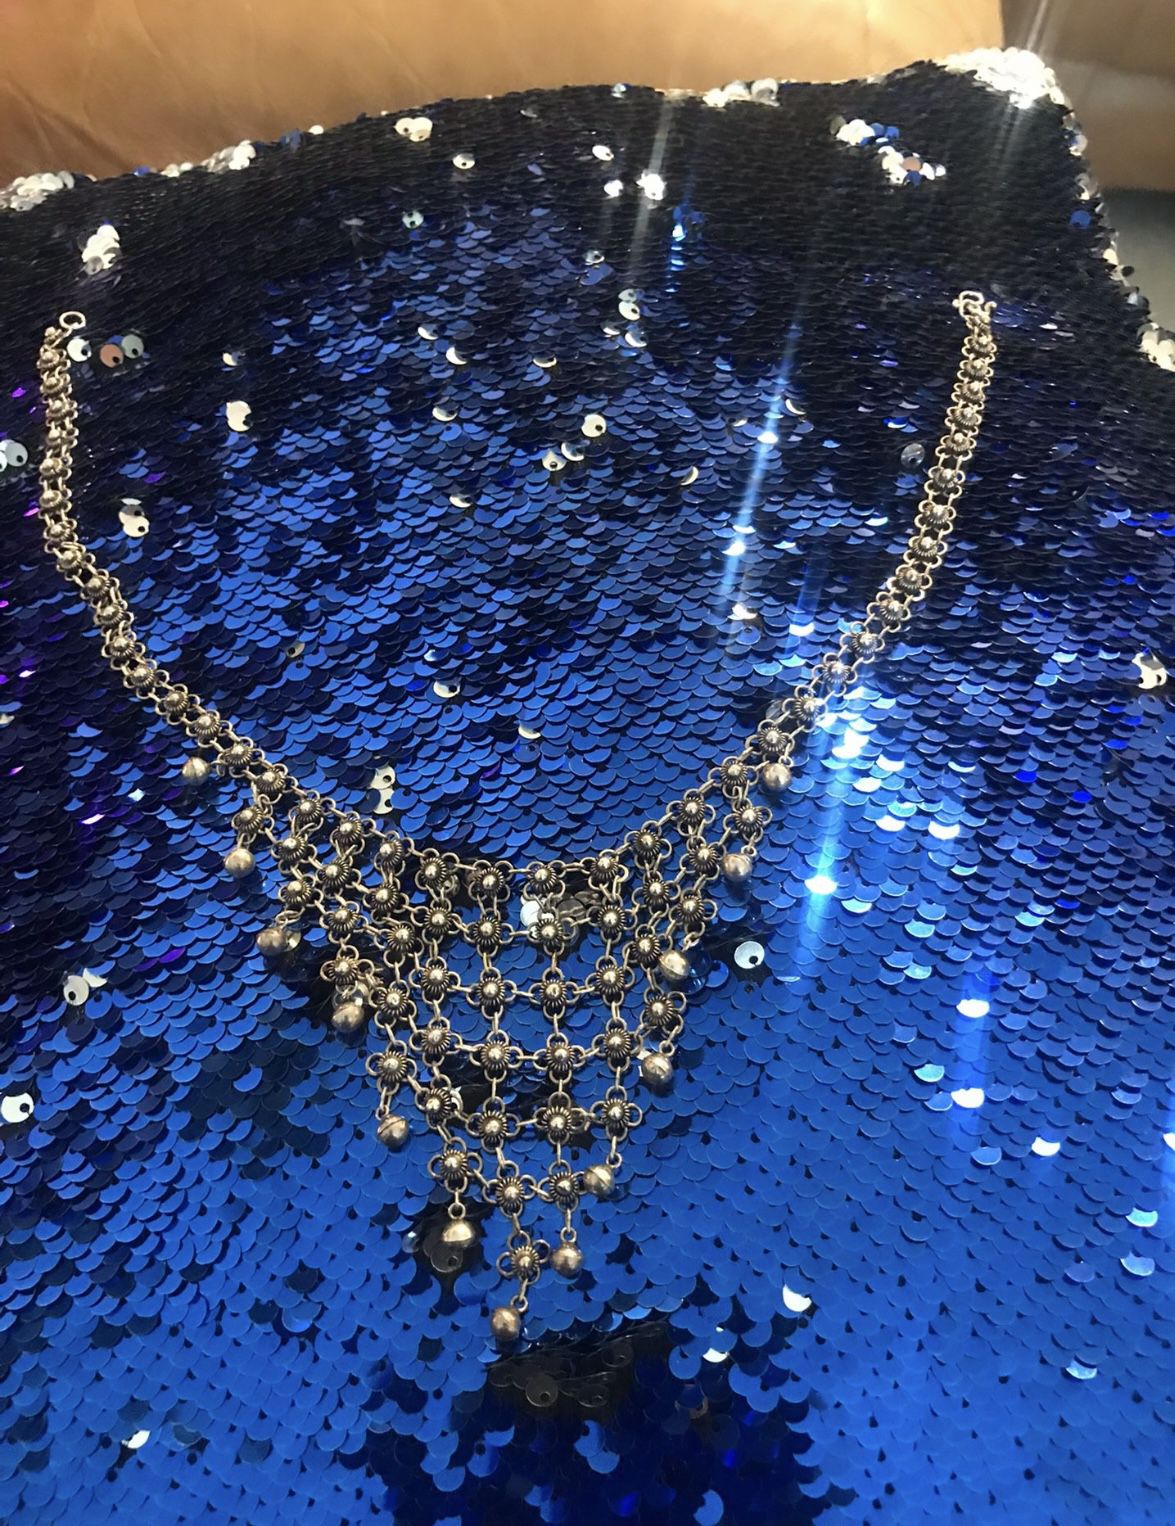 Silver Necklace 